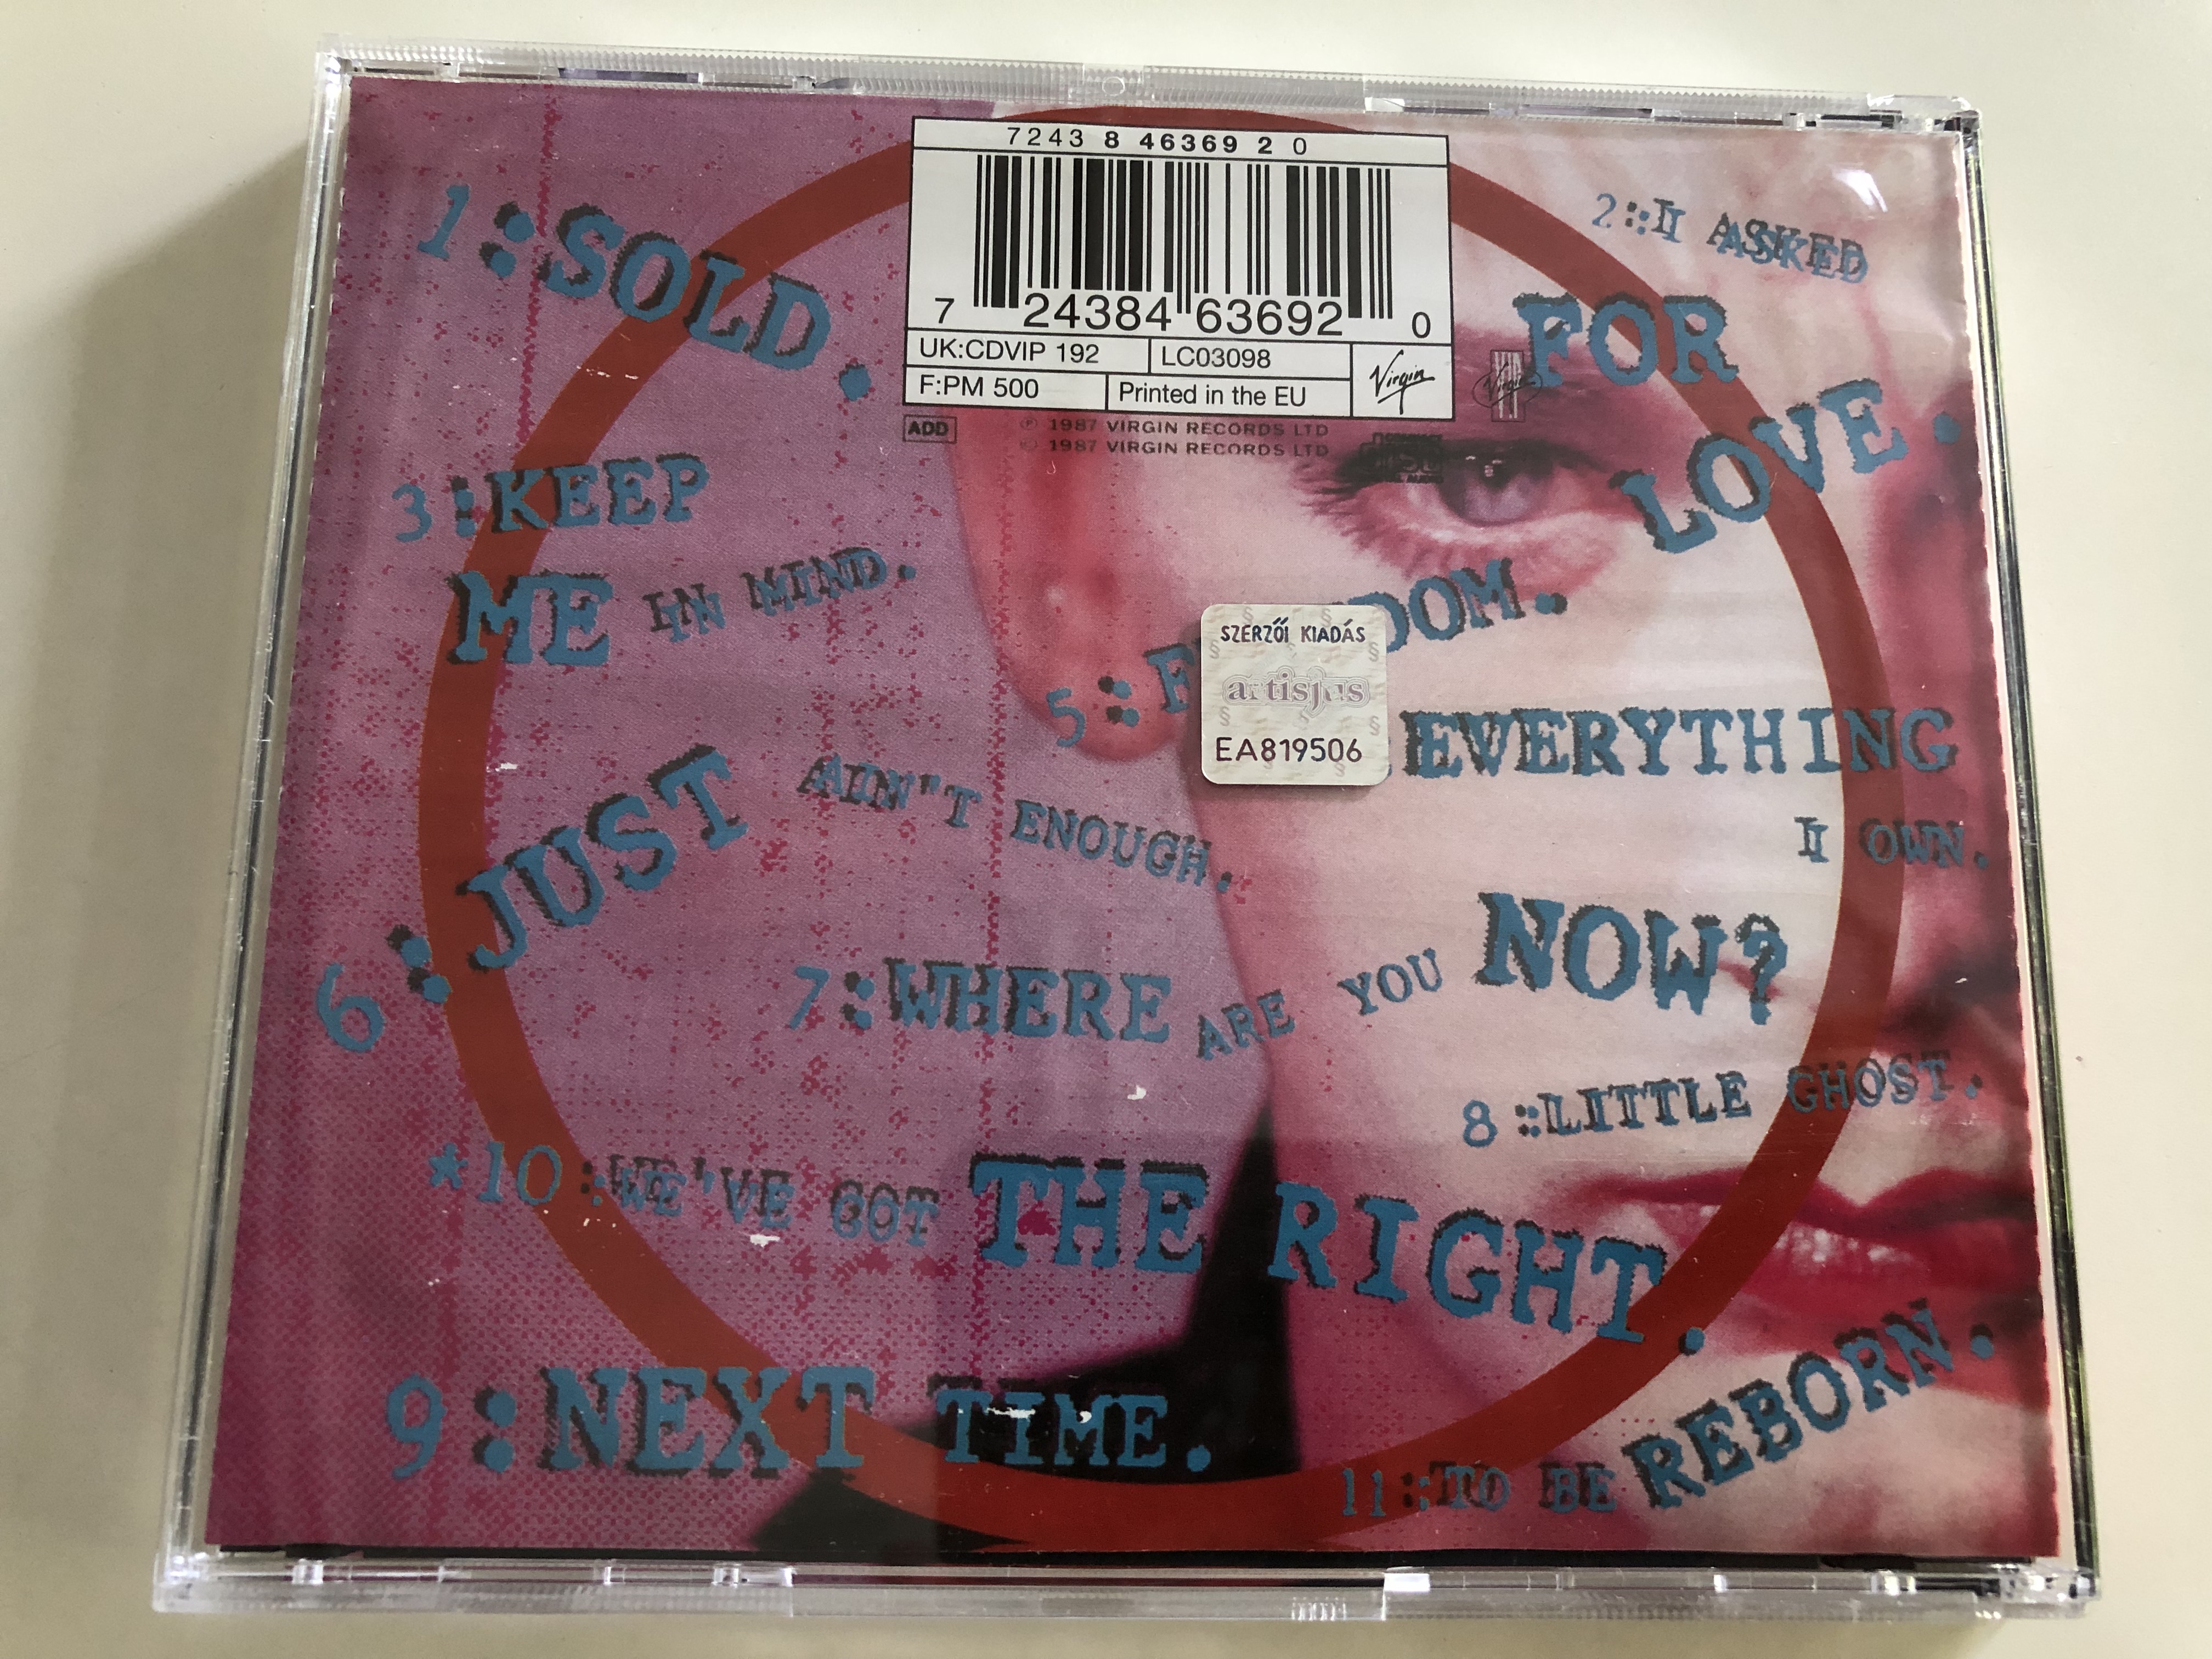 boy-george-sold-audio-cd-1995-virgin-records-cdvip-192-6-.jpg